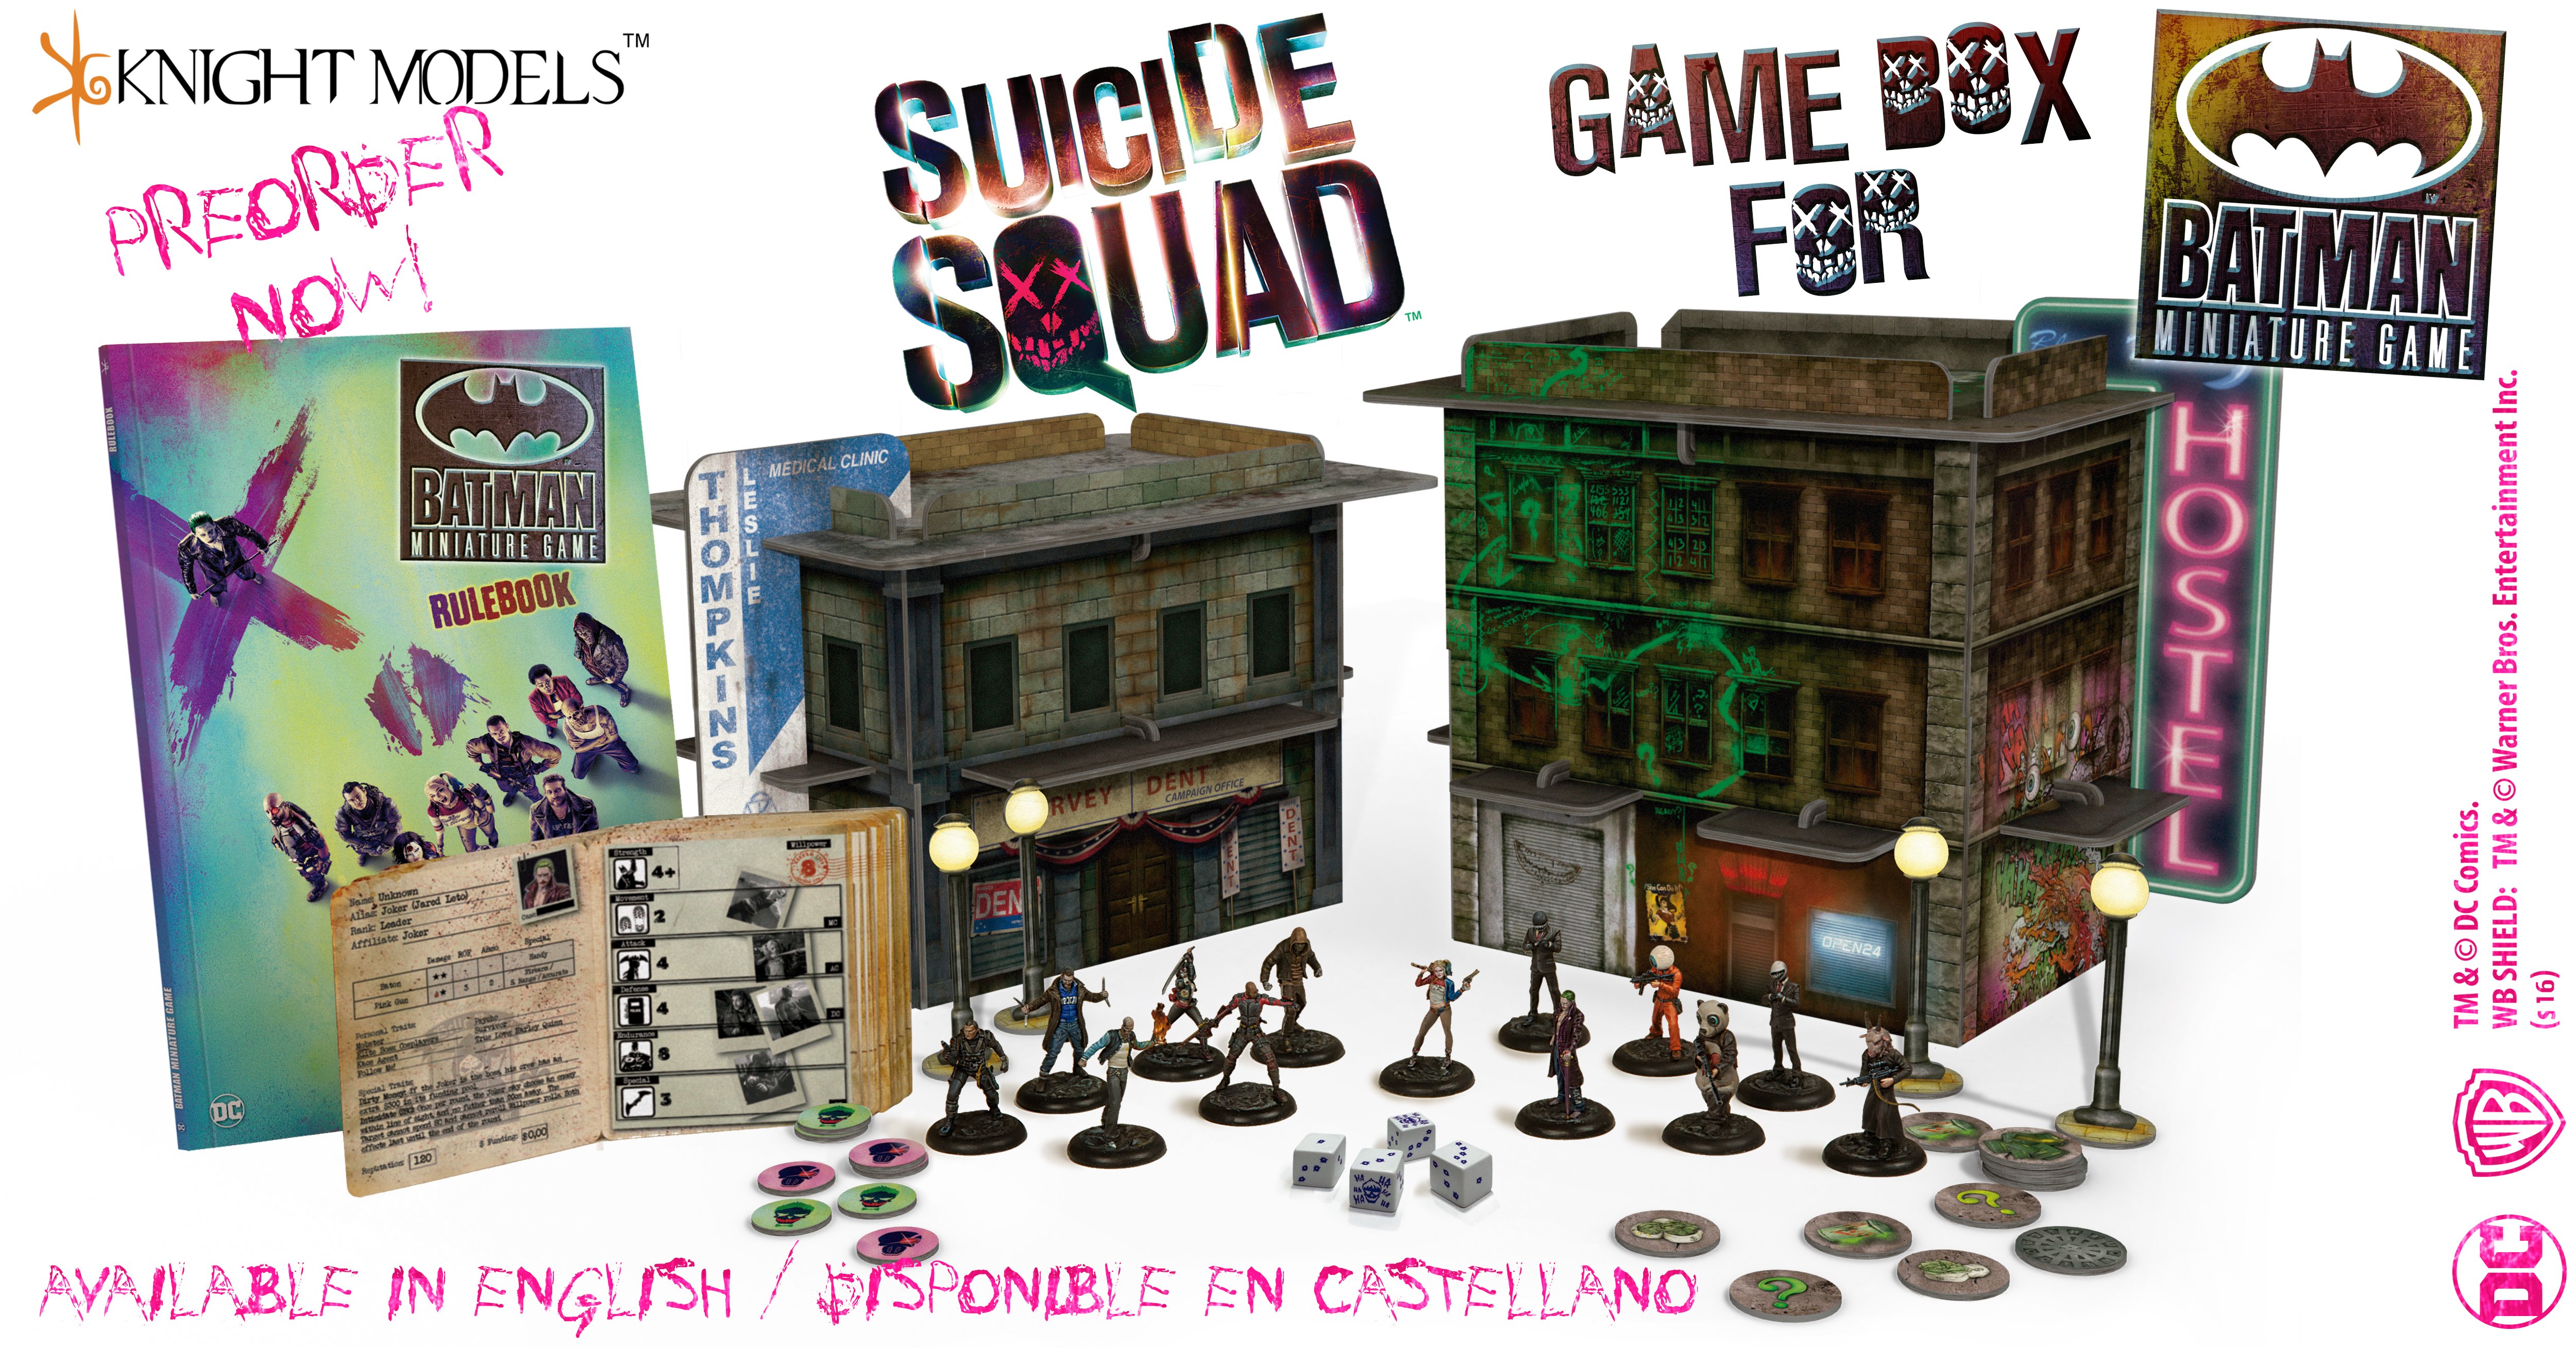 Suicide Squad Game Box for Batman Miniature Game